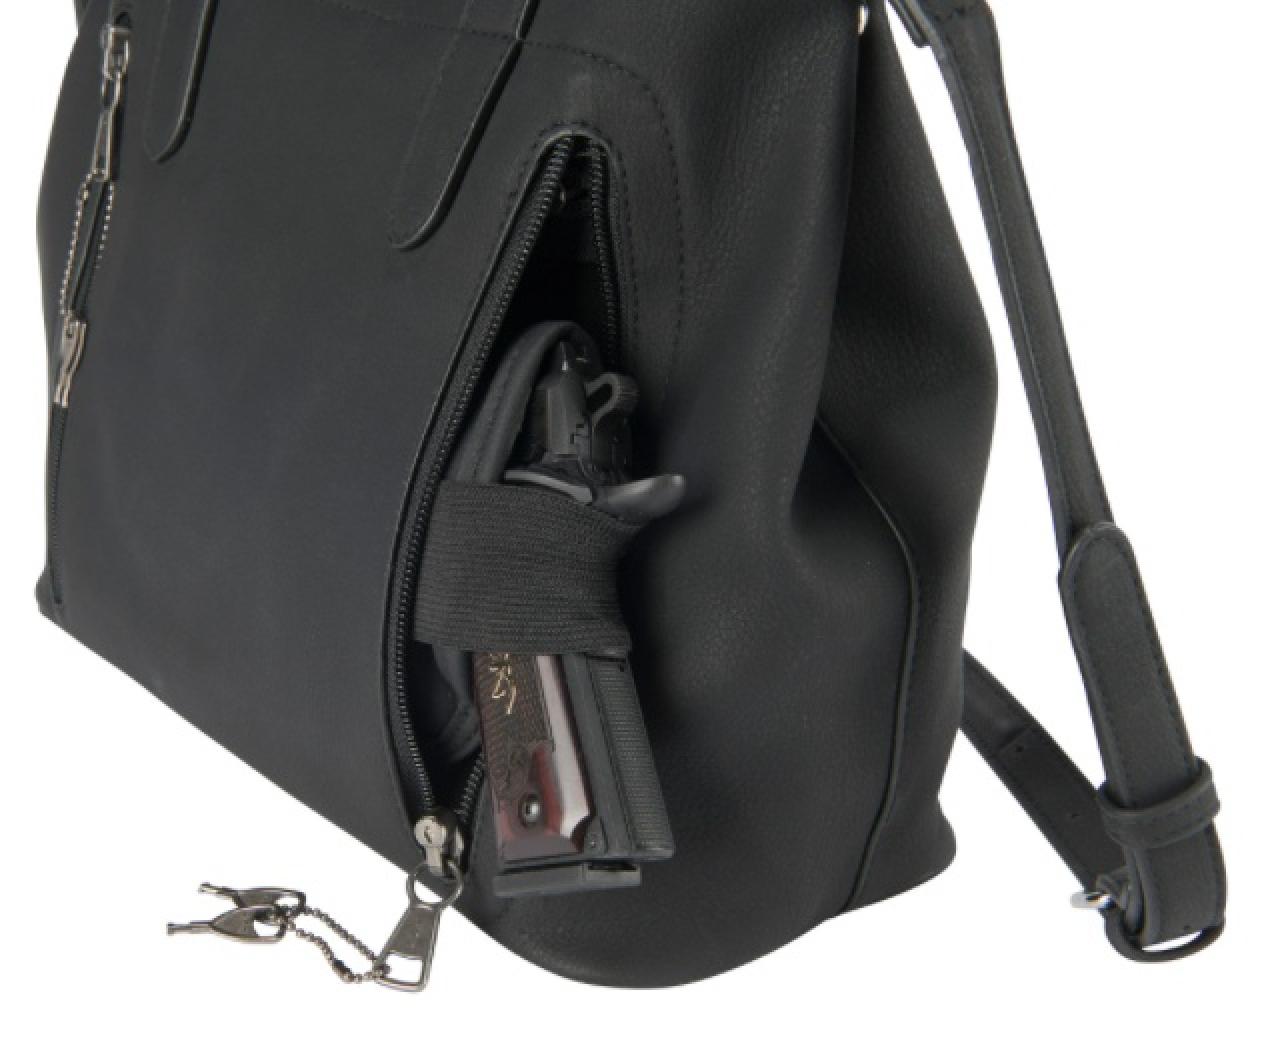 Browning Concealed Carry Miranda Handbag Gun in Concealed Carry Pocket